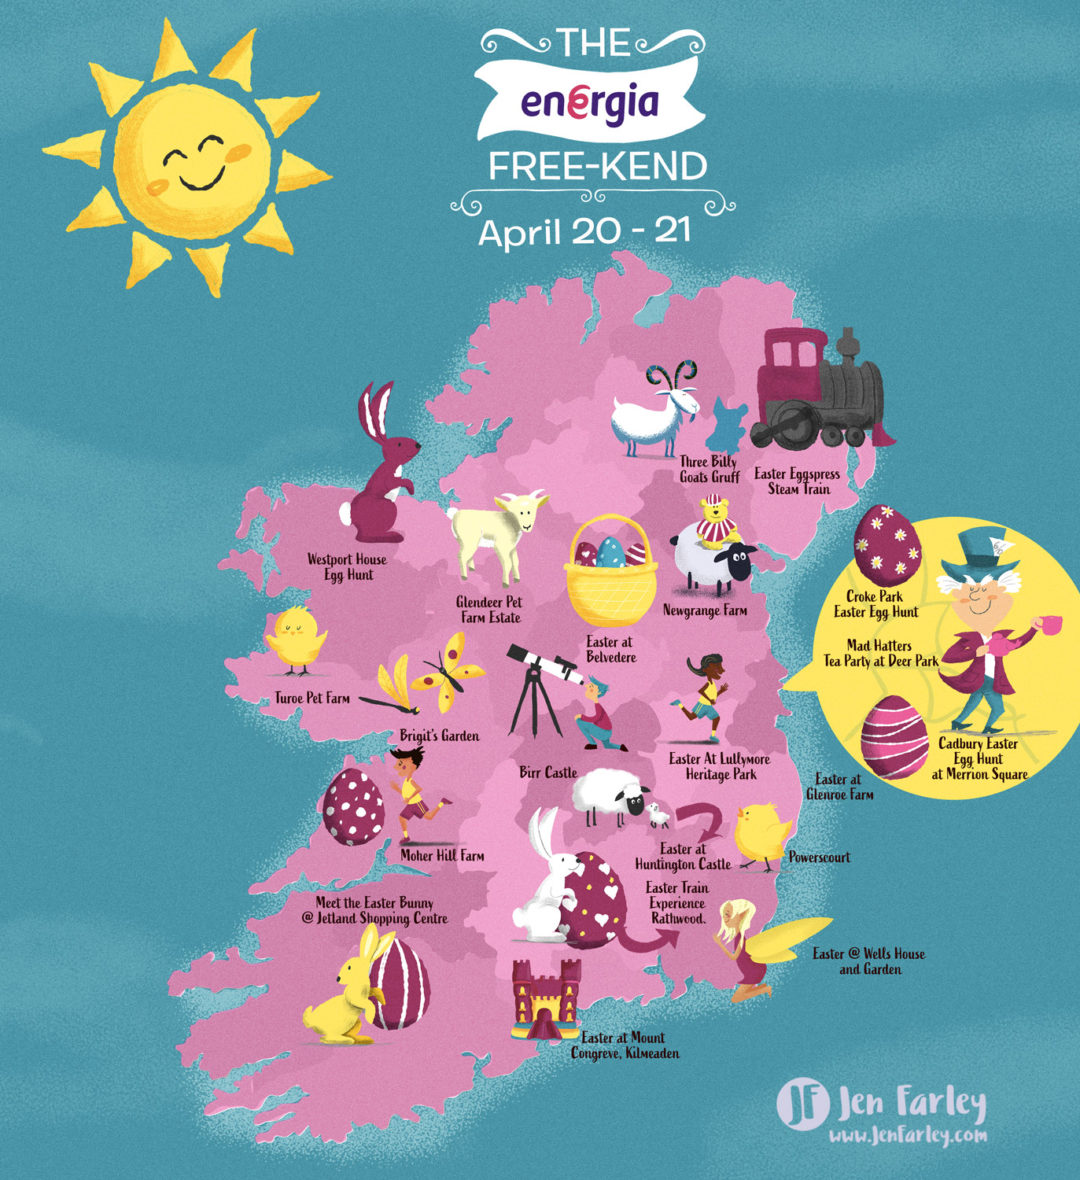 Easter Weekend Illustrated Map Of Ireland | Jennifer Farley